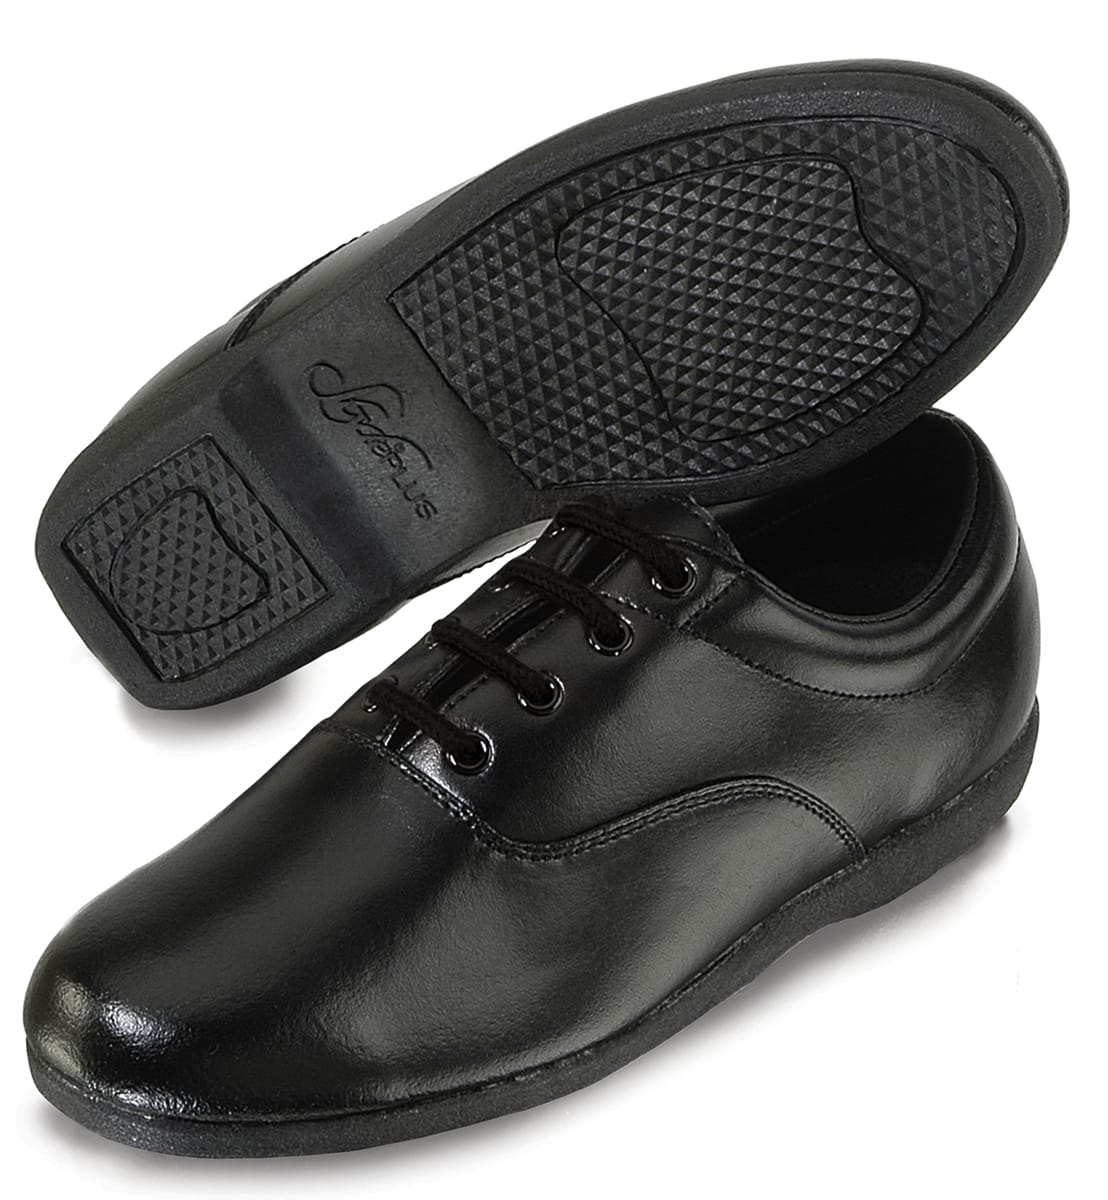 Styleplus Pinnacle Marching Shoes - Black - Drillcomp, Inc.